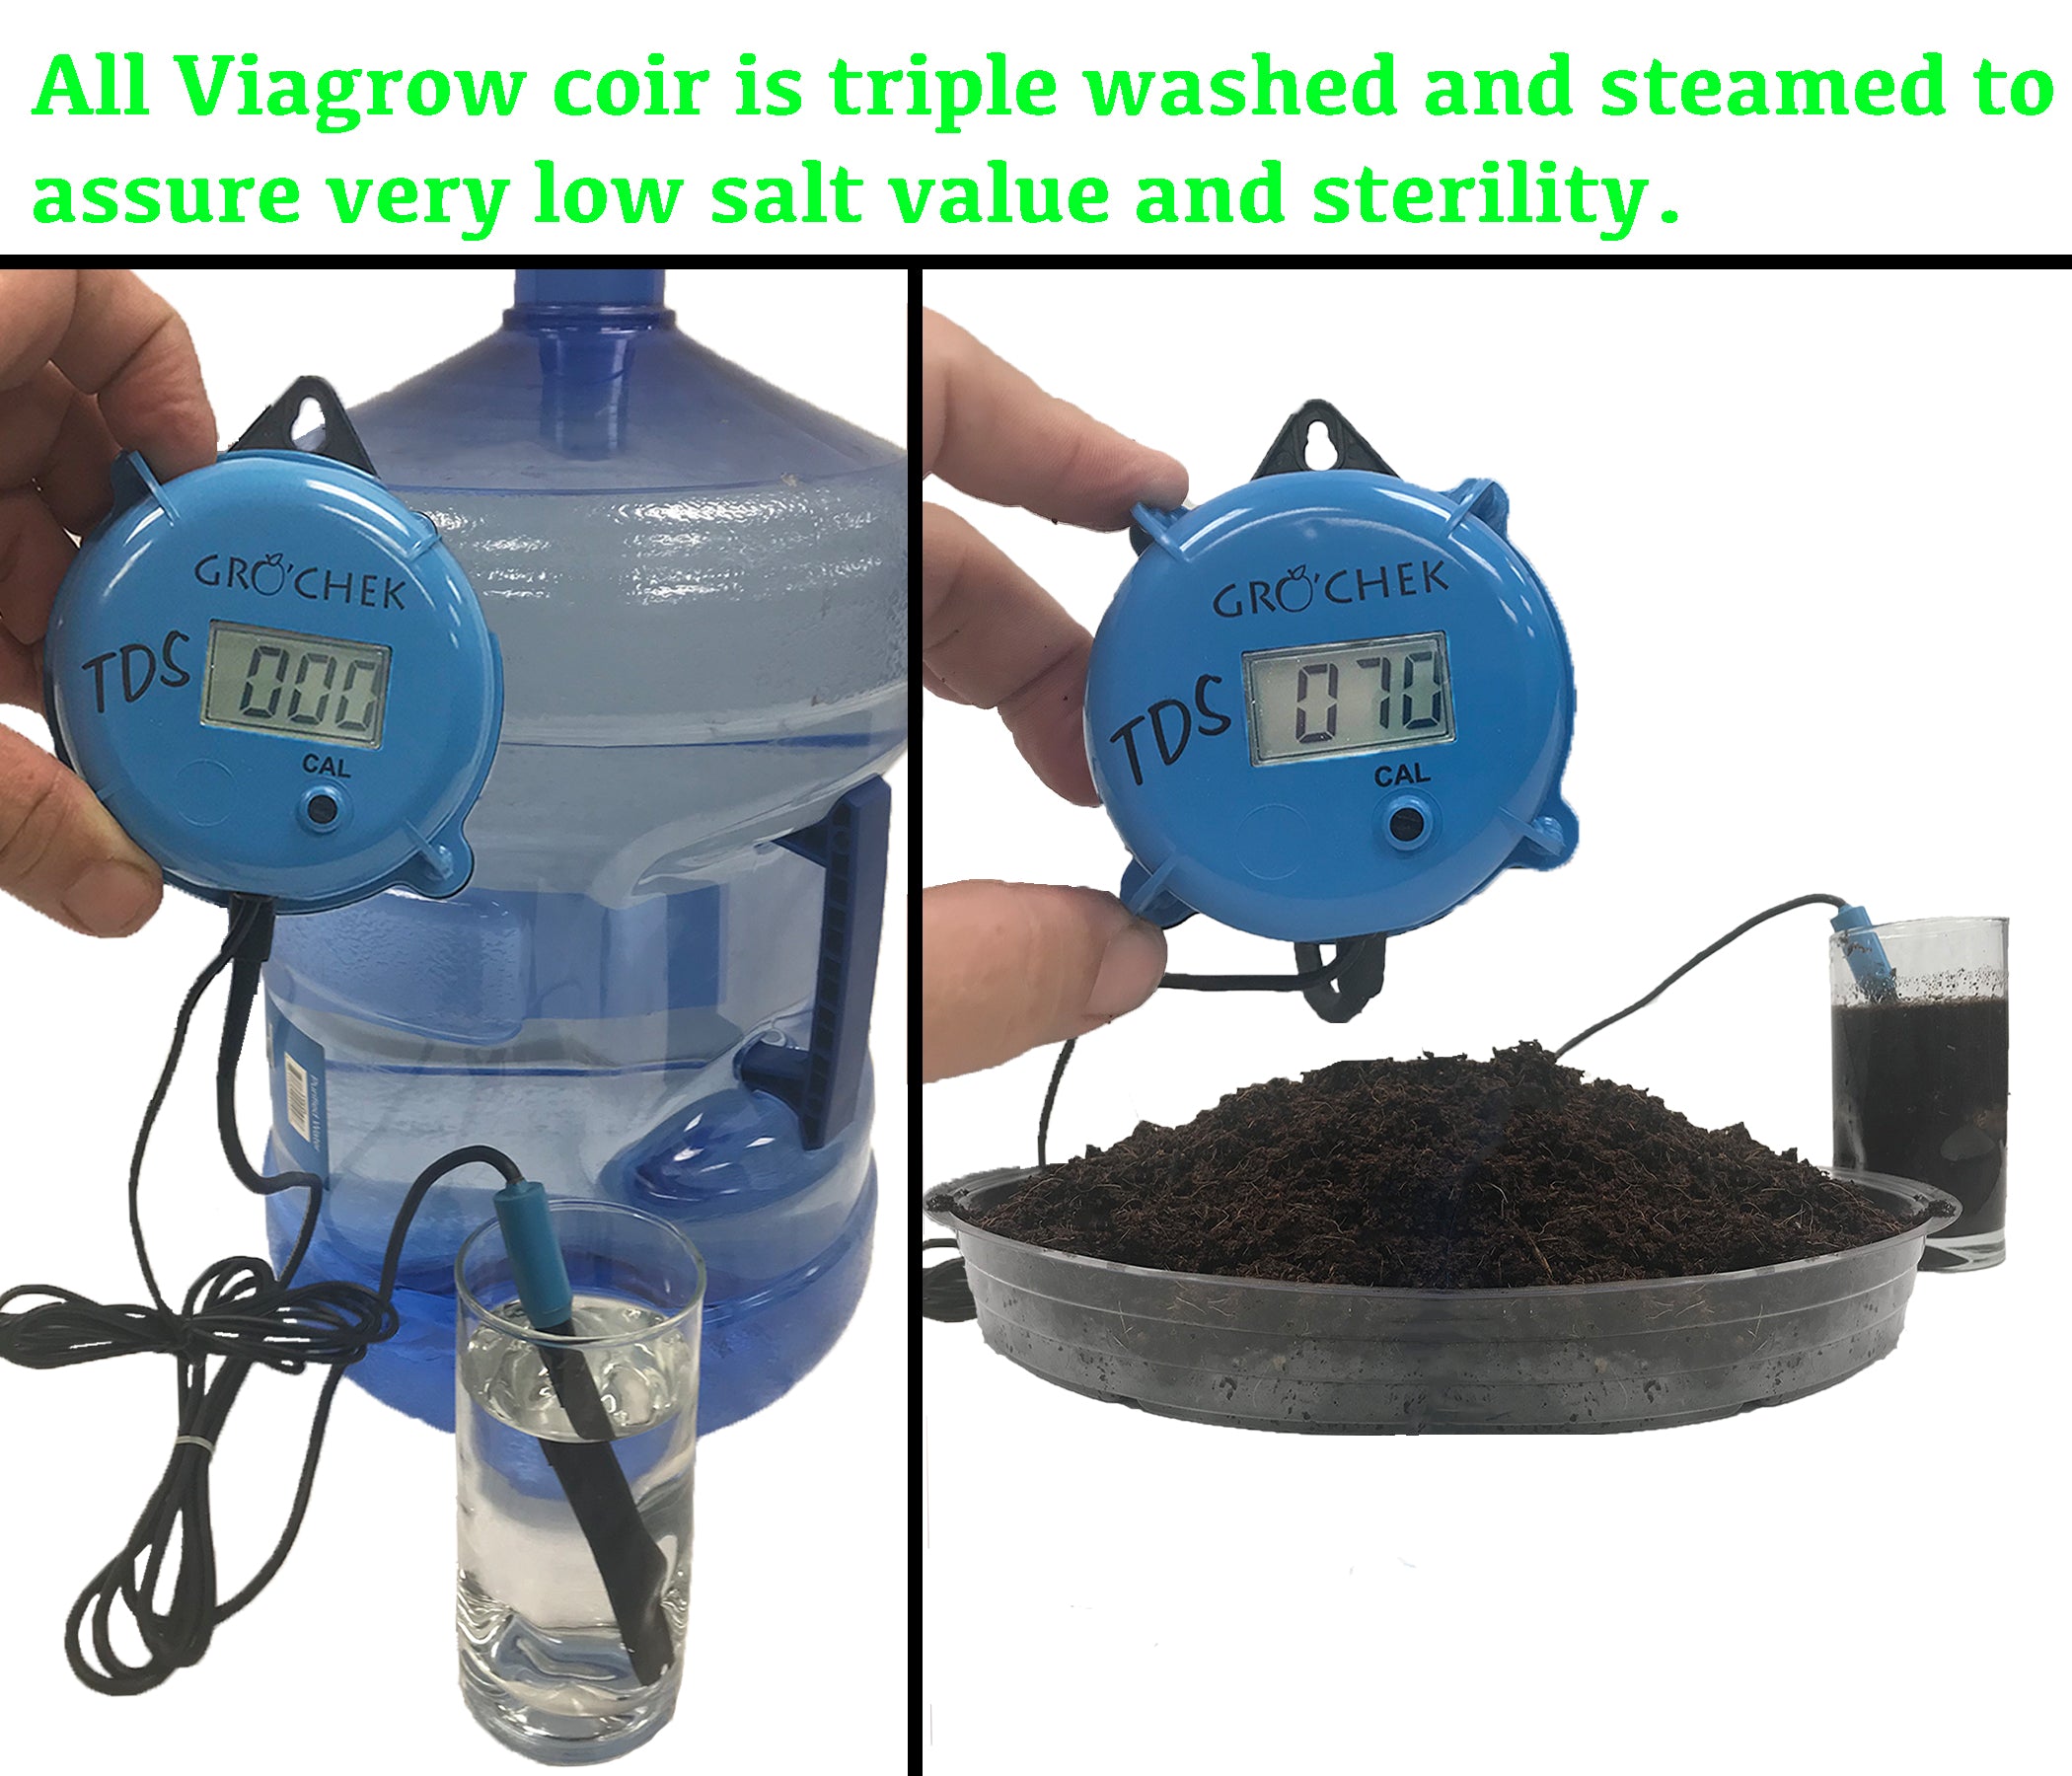 Viagrow Propagation Seedling & Mushroom Cultivation, Coco Coir Growing Media, 10-Pack